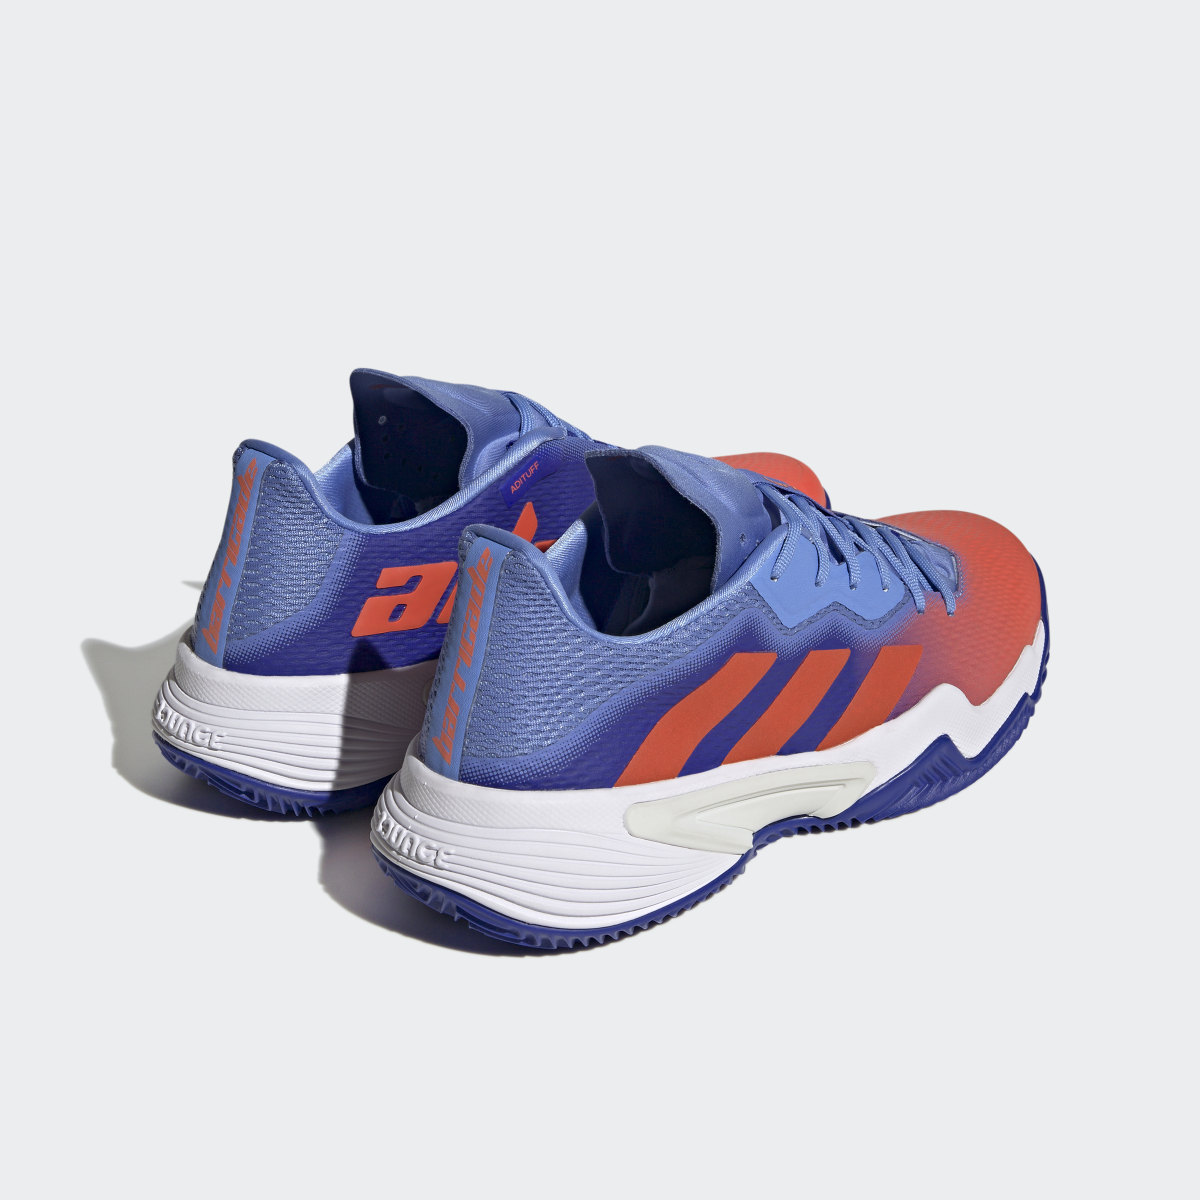 Adidas Barricade Tennis Shoes. 6